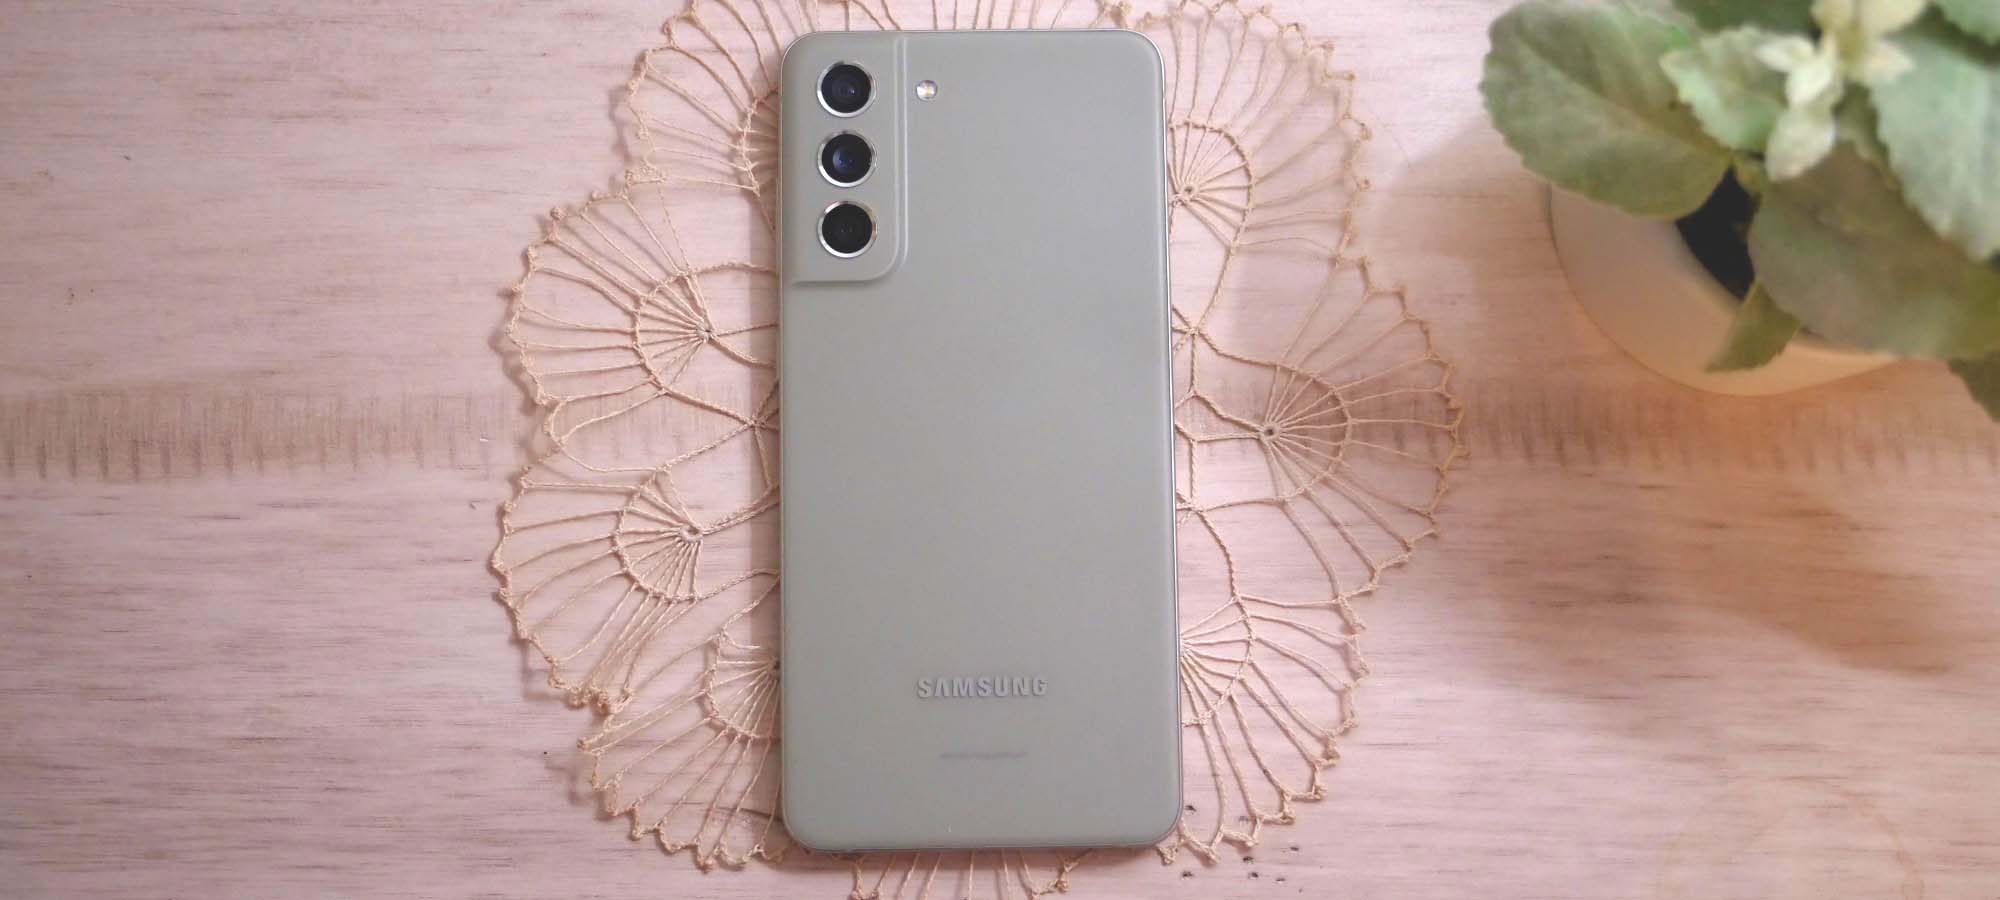 Samsung Galaxy S21 FE review: plenty on offer